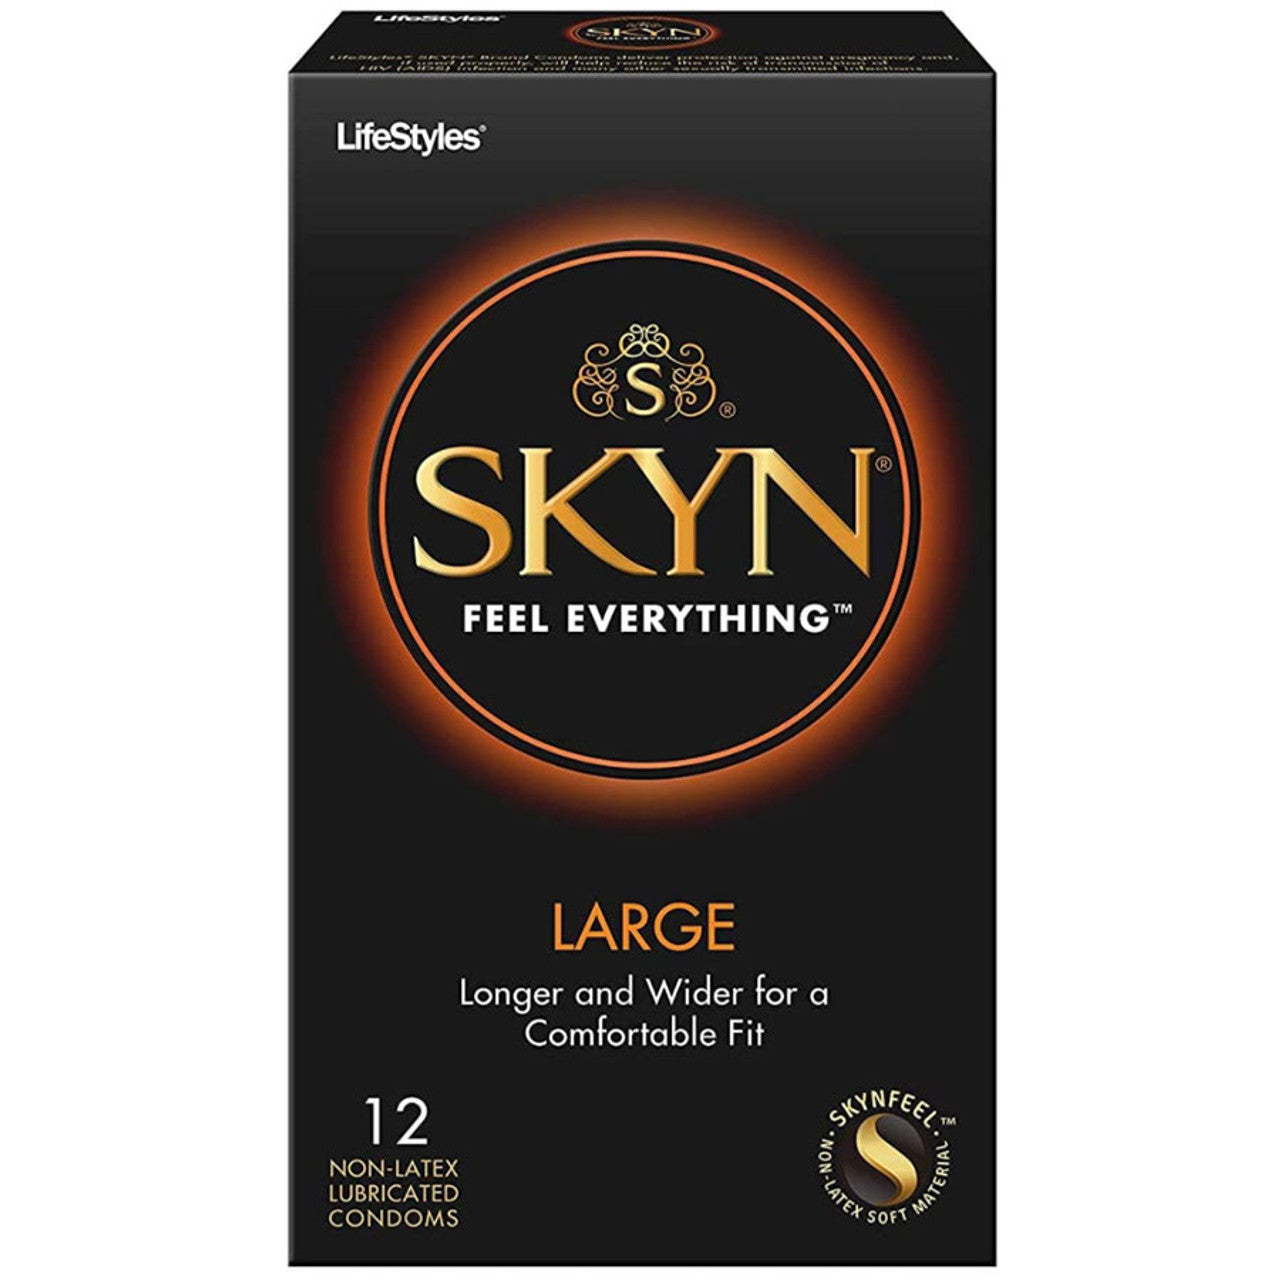 Lifestyles Skyn Condoms Large 12 pack.